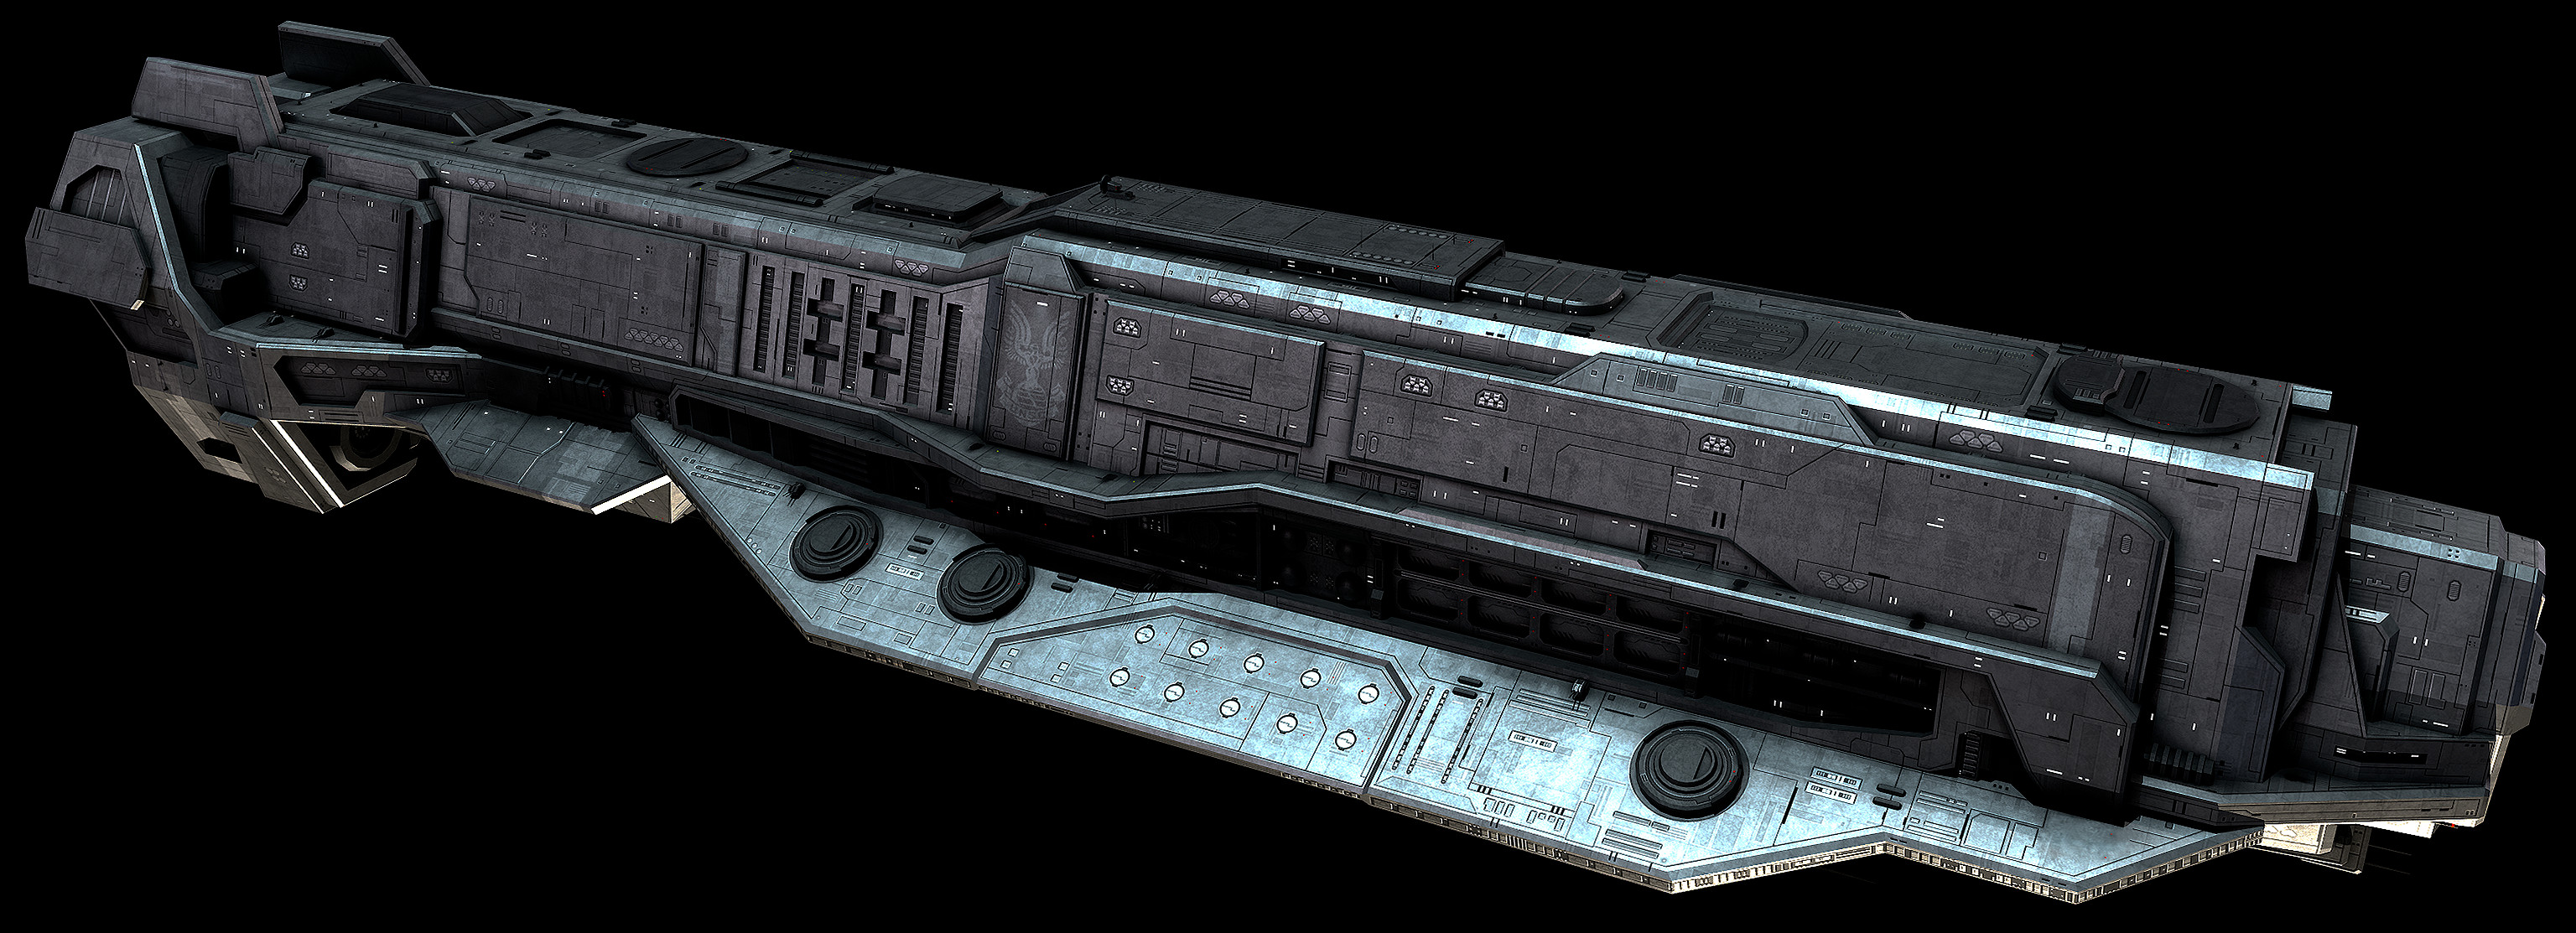 Ency2 Punic-class Carrier (Jared Harris).jpg